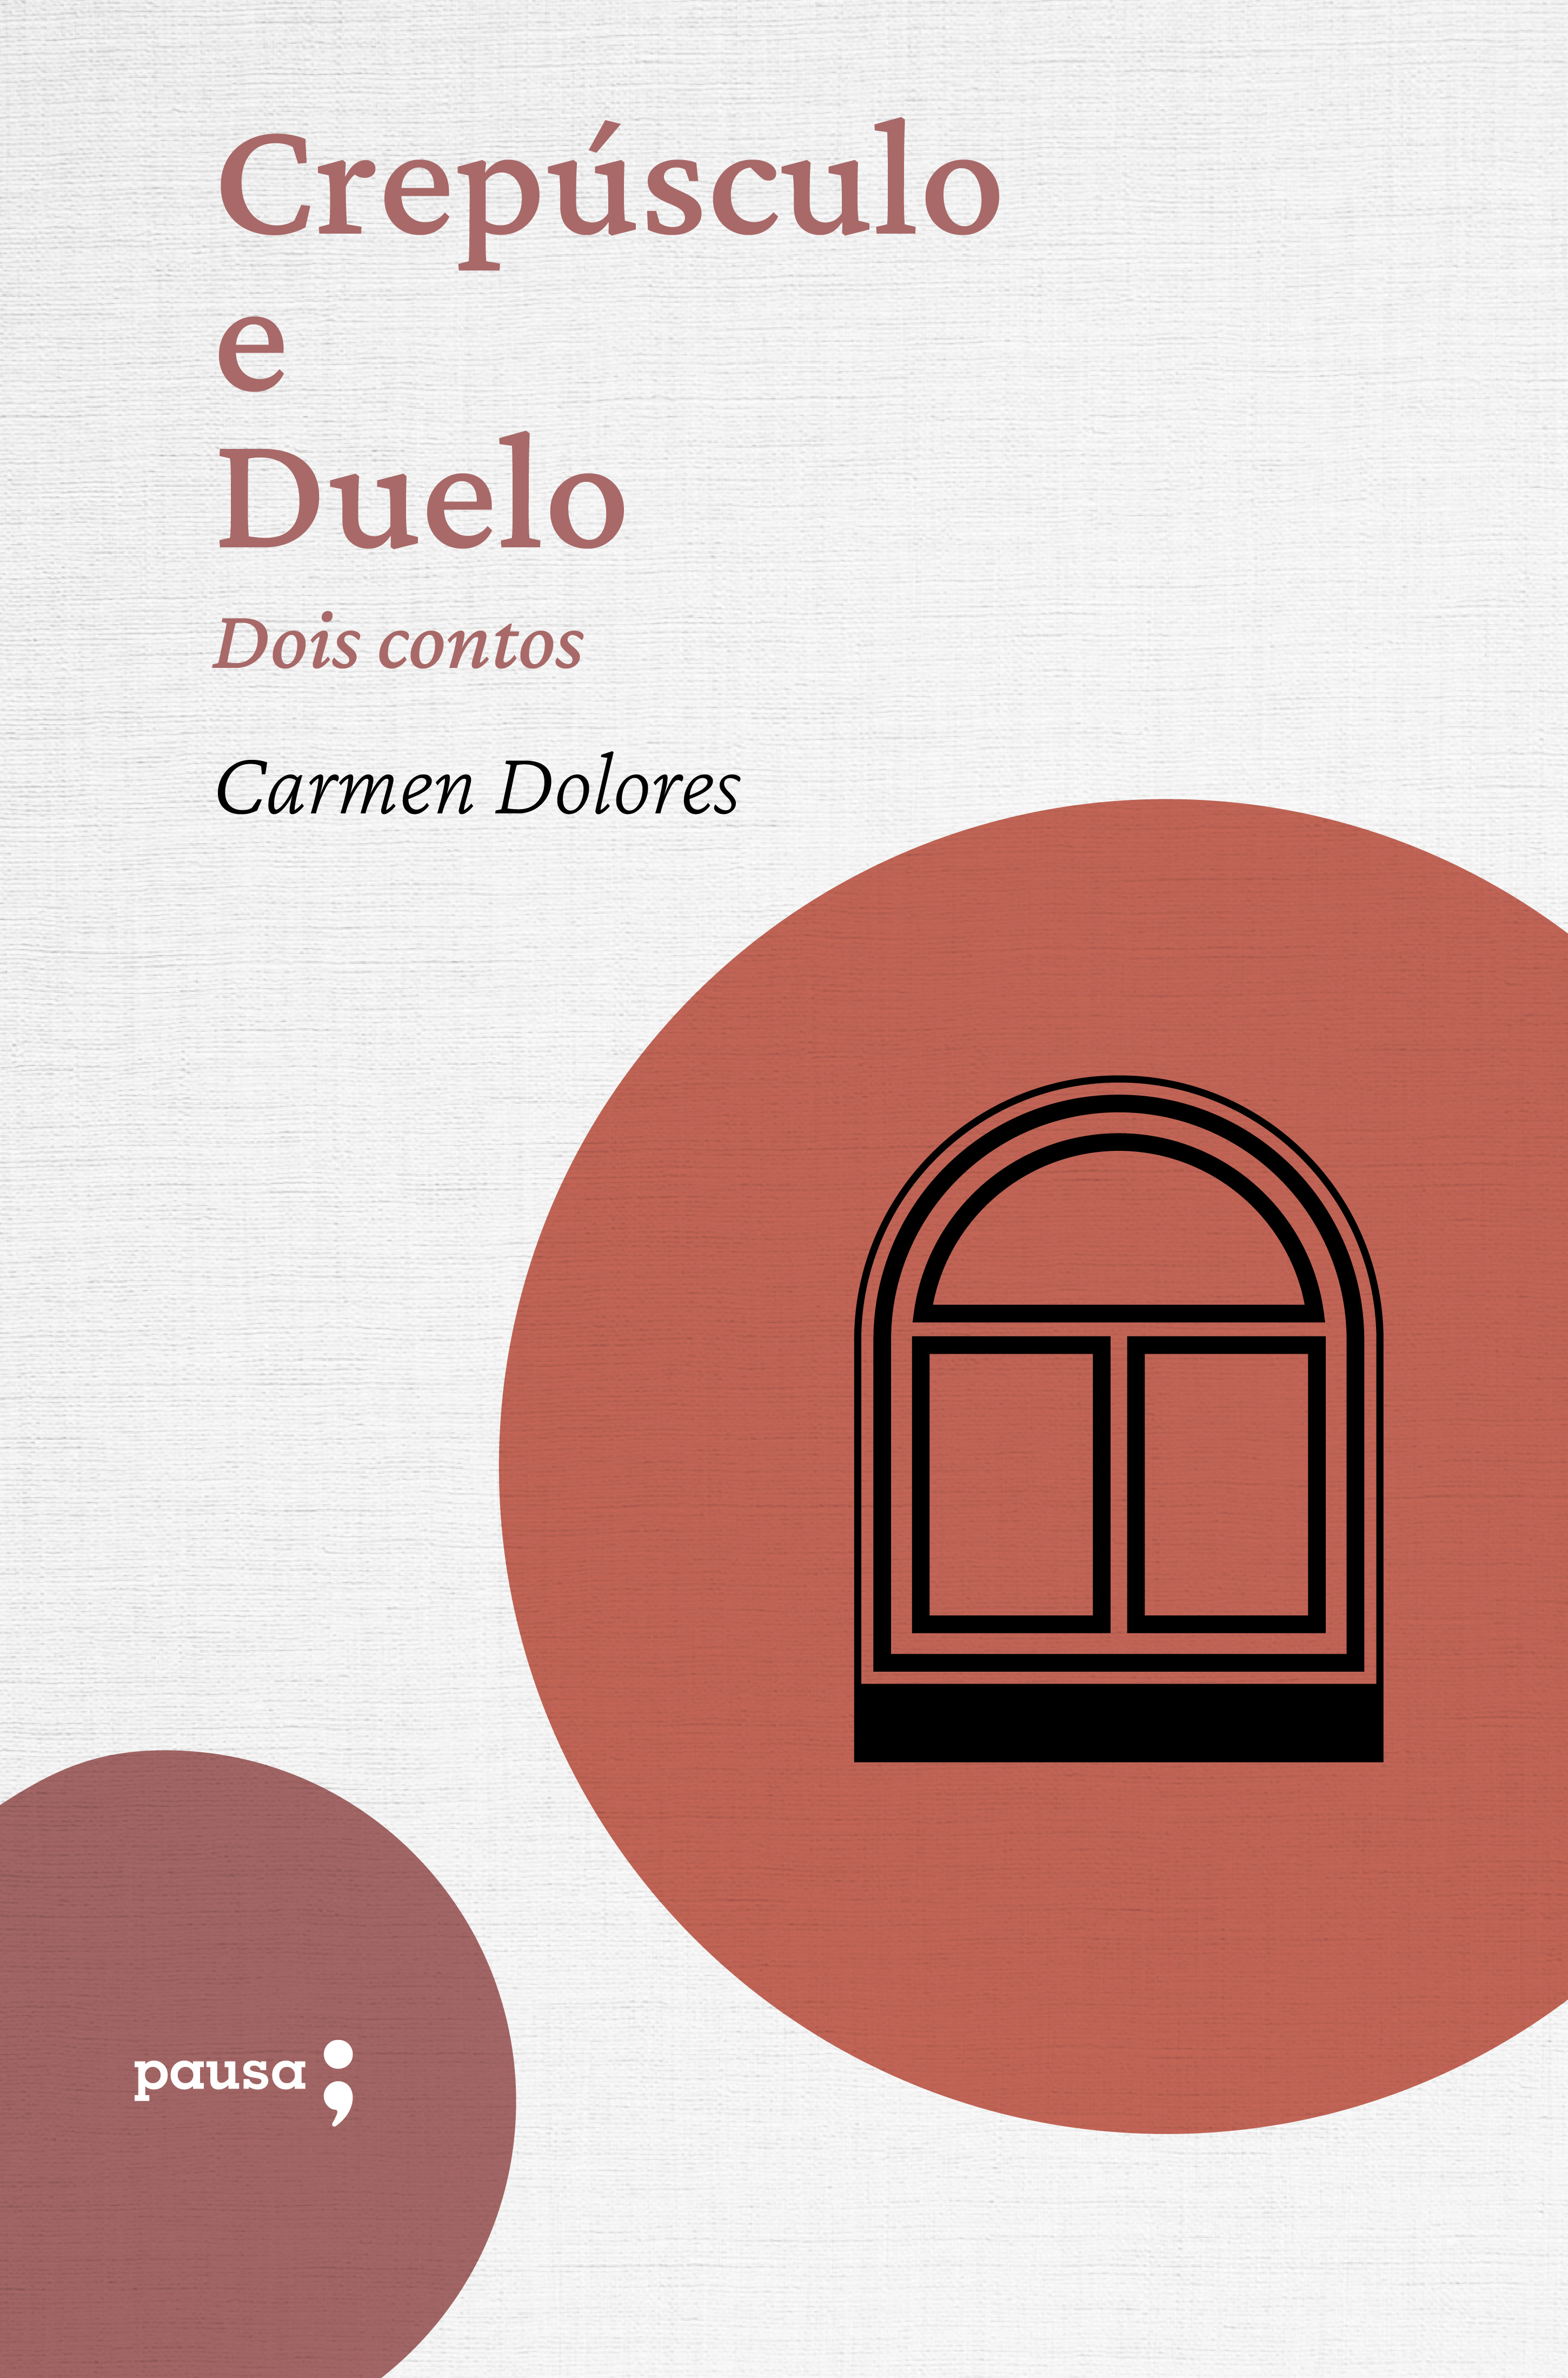 Crepúsculo e Duelo - dois contos de Carmen Dolores